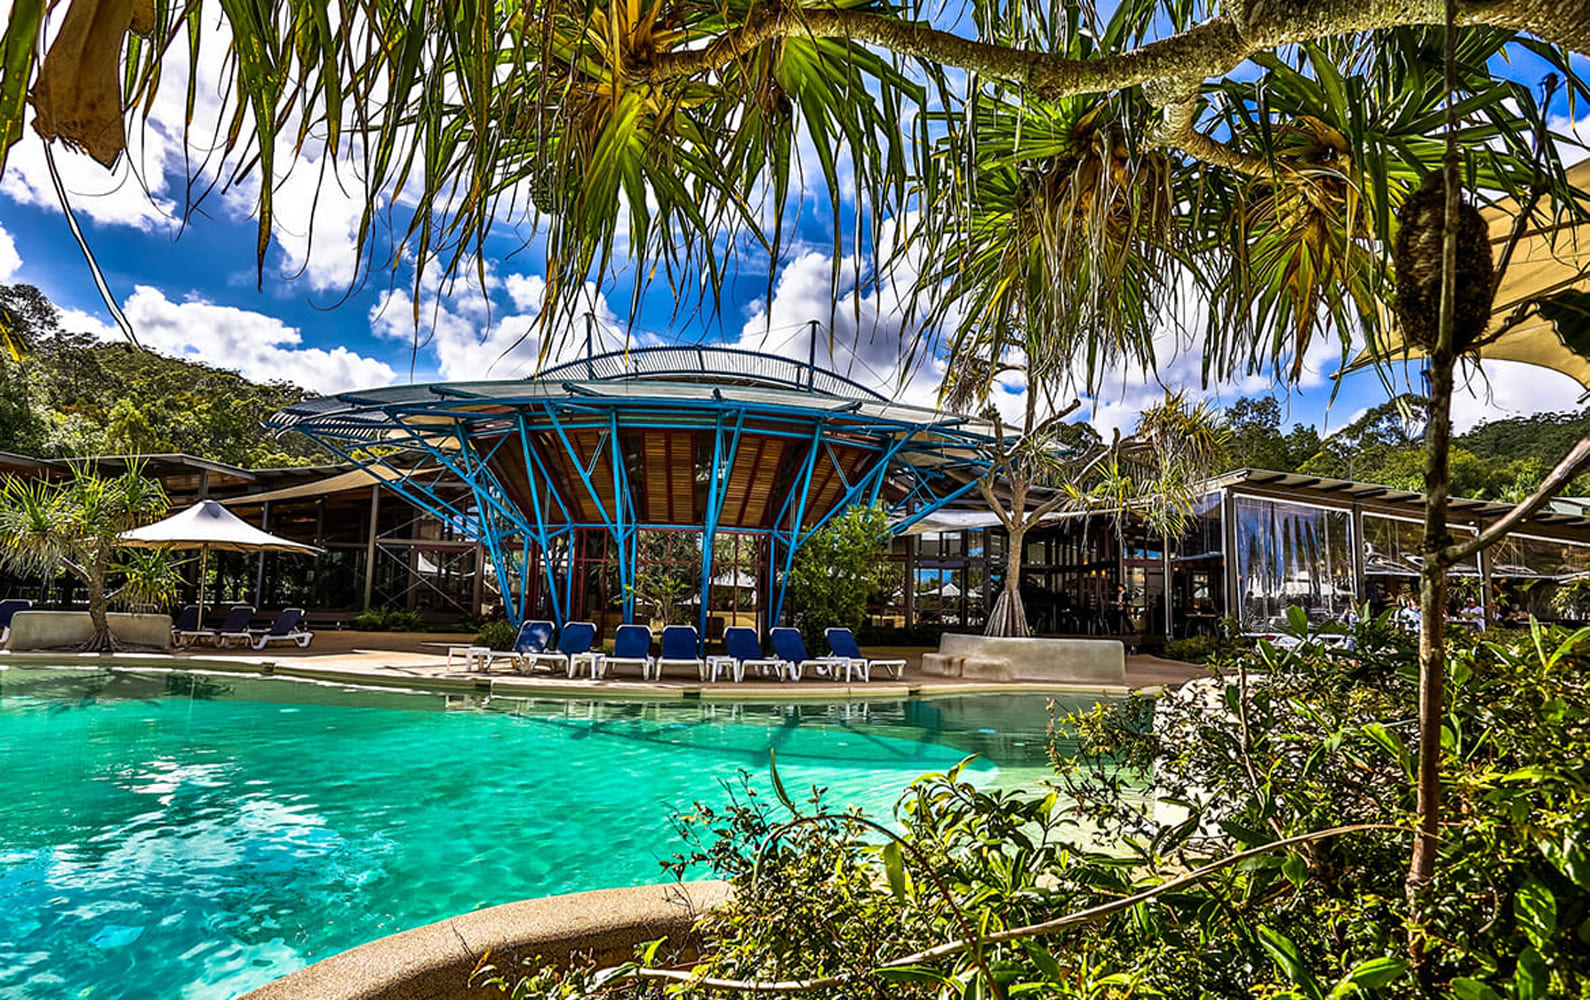 Kingfisher Bay Resort Fraser Island